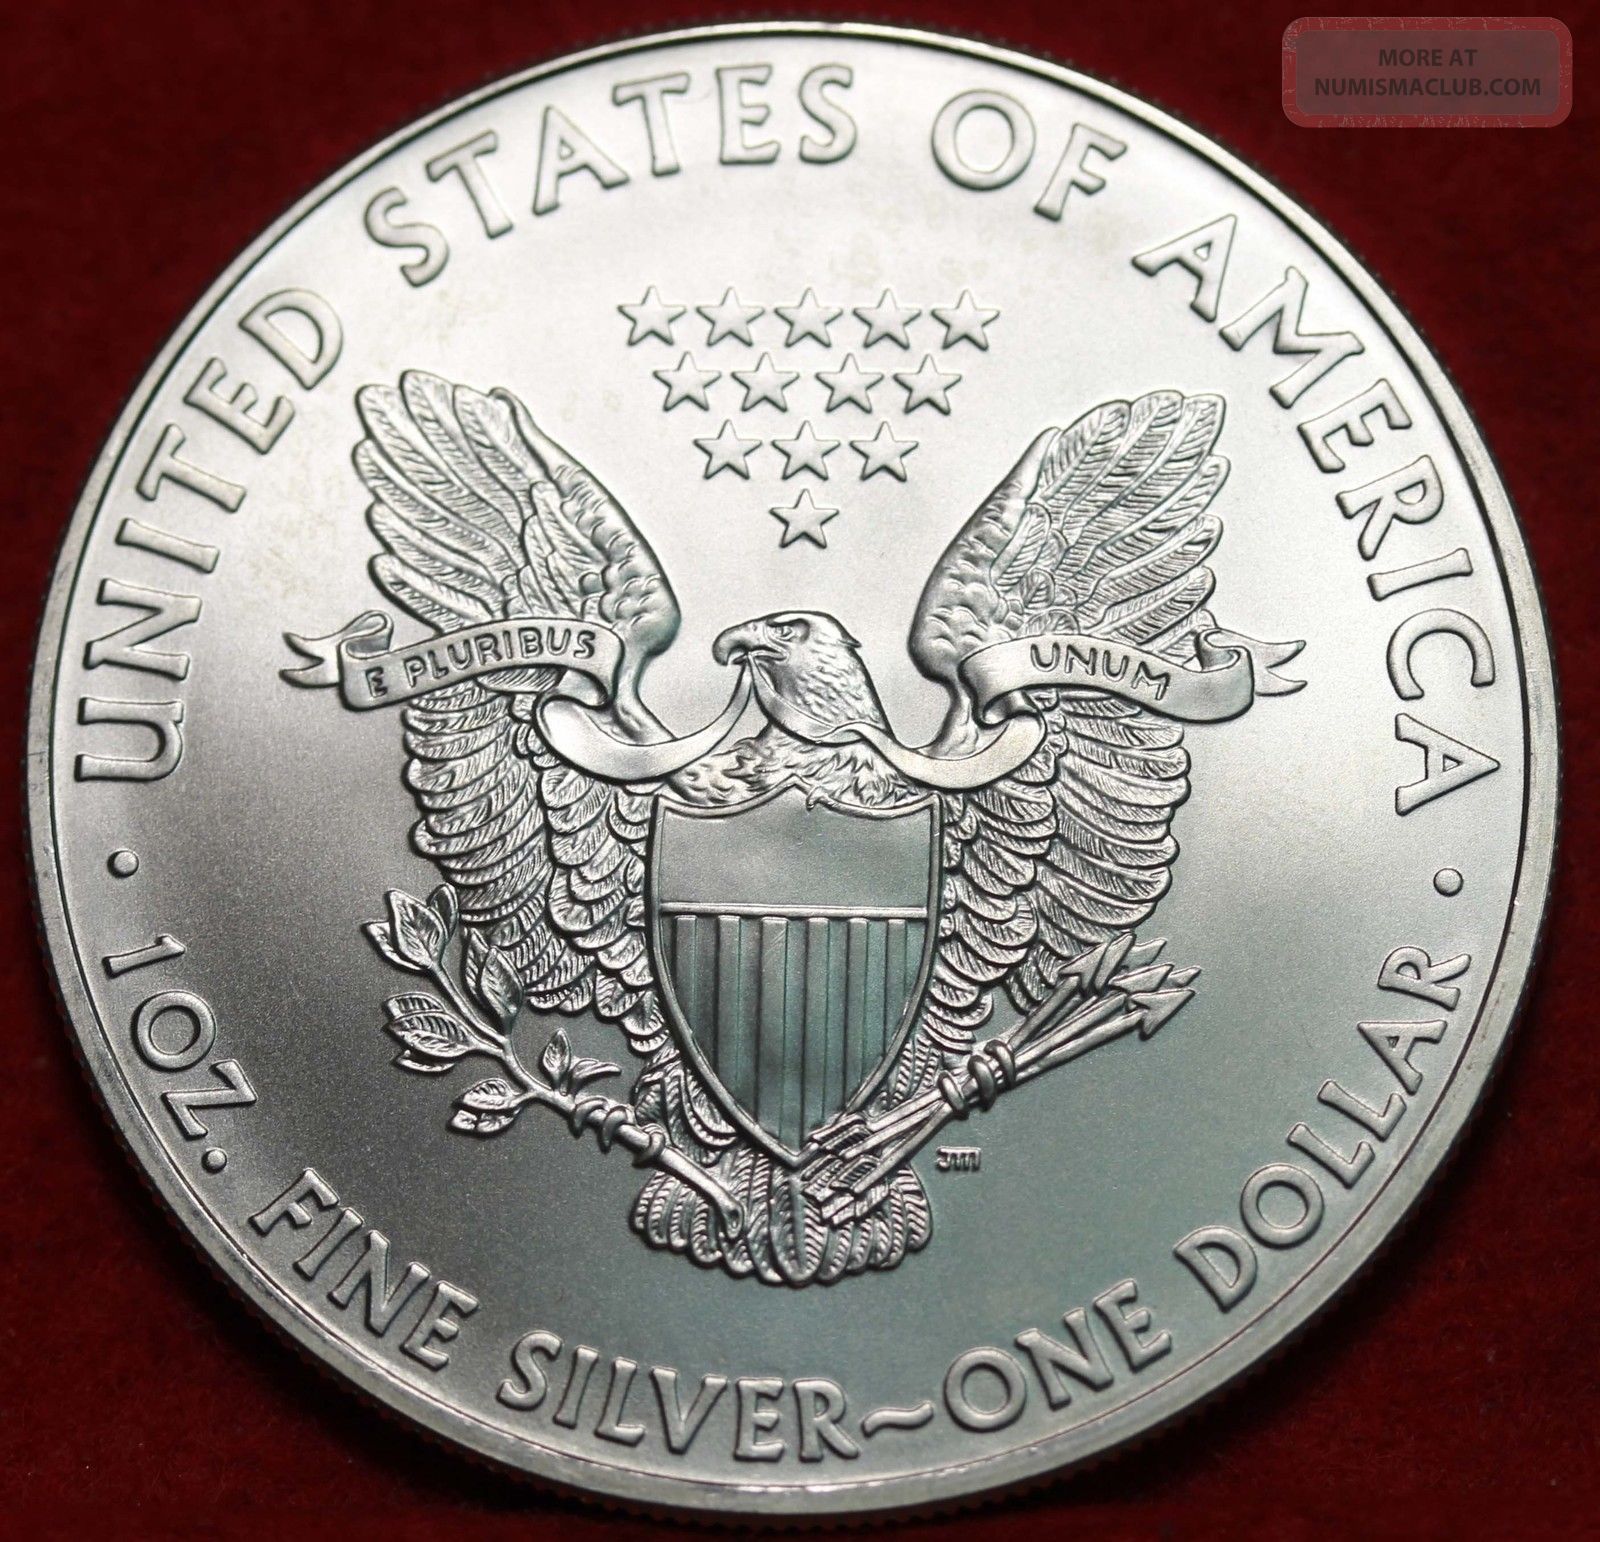 Uncirculated 2009 American Eagle Silver Dollar